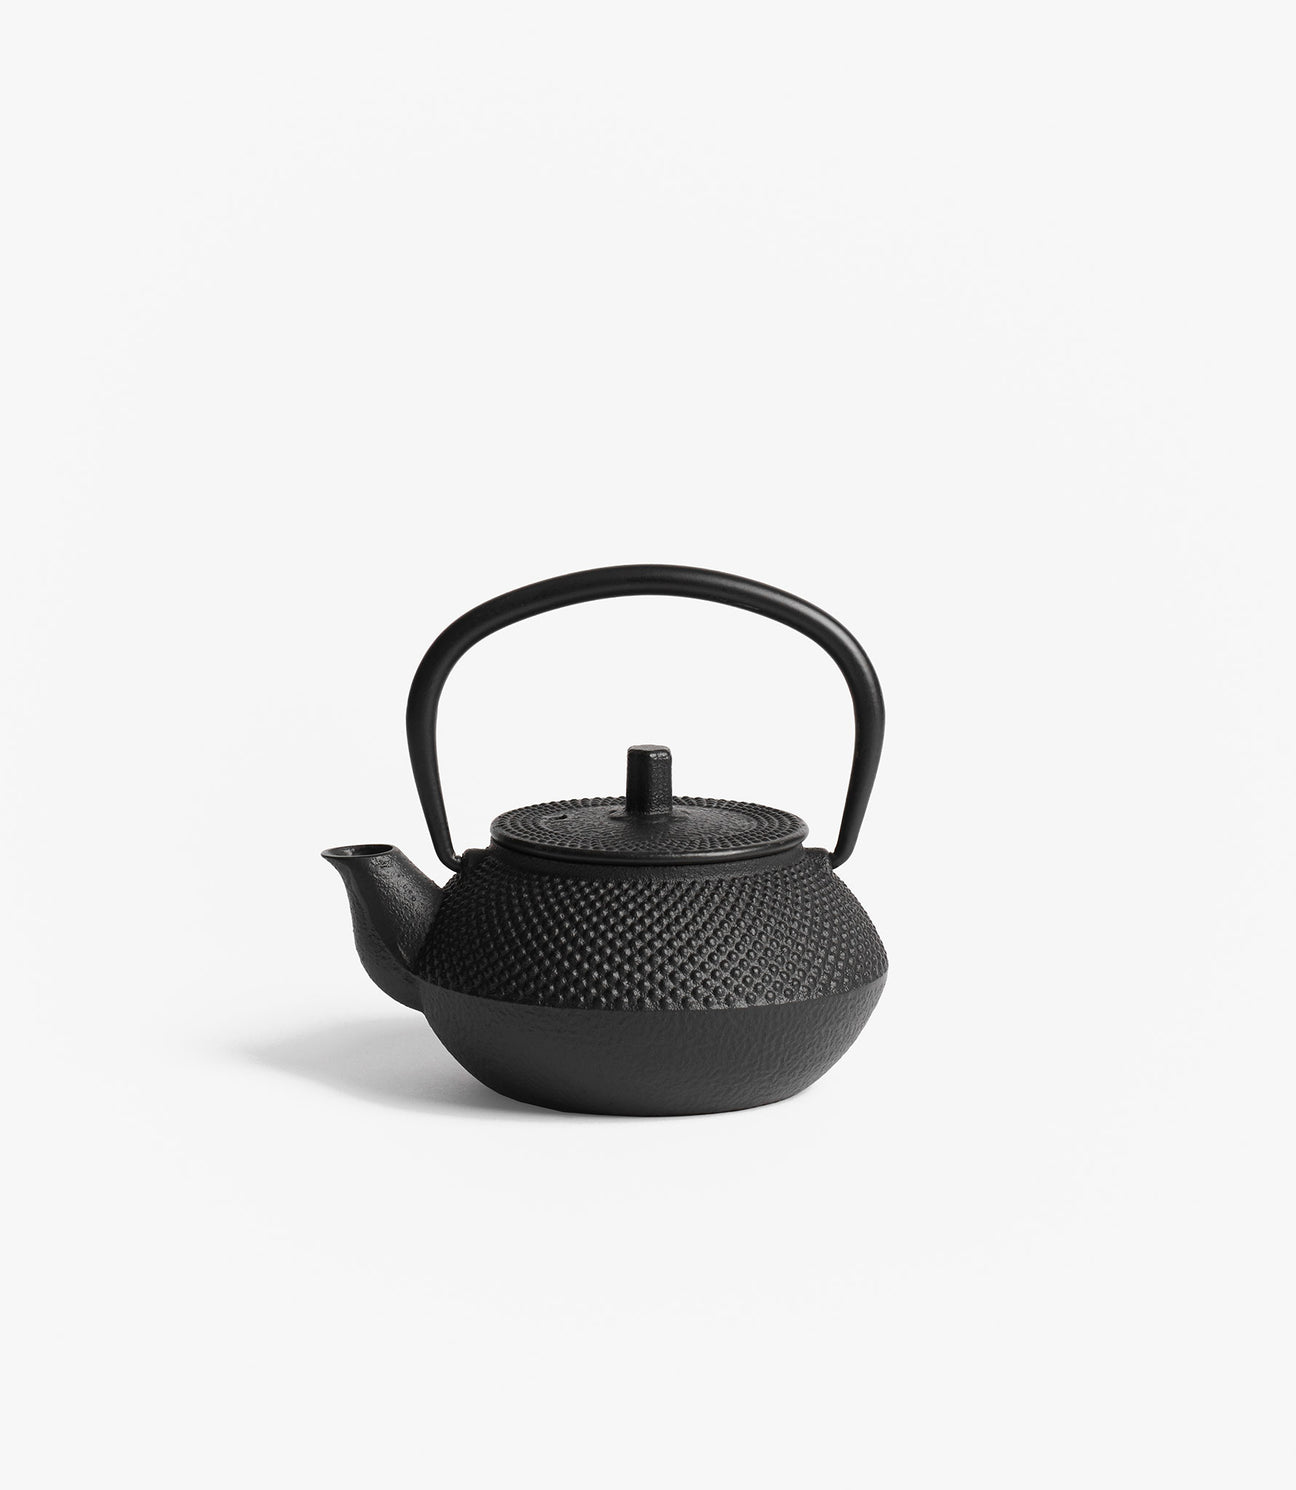 Small handcrafted cast iron teapot 0.3l - HJEM kensington